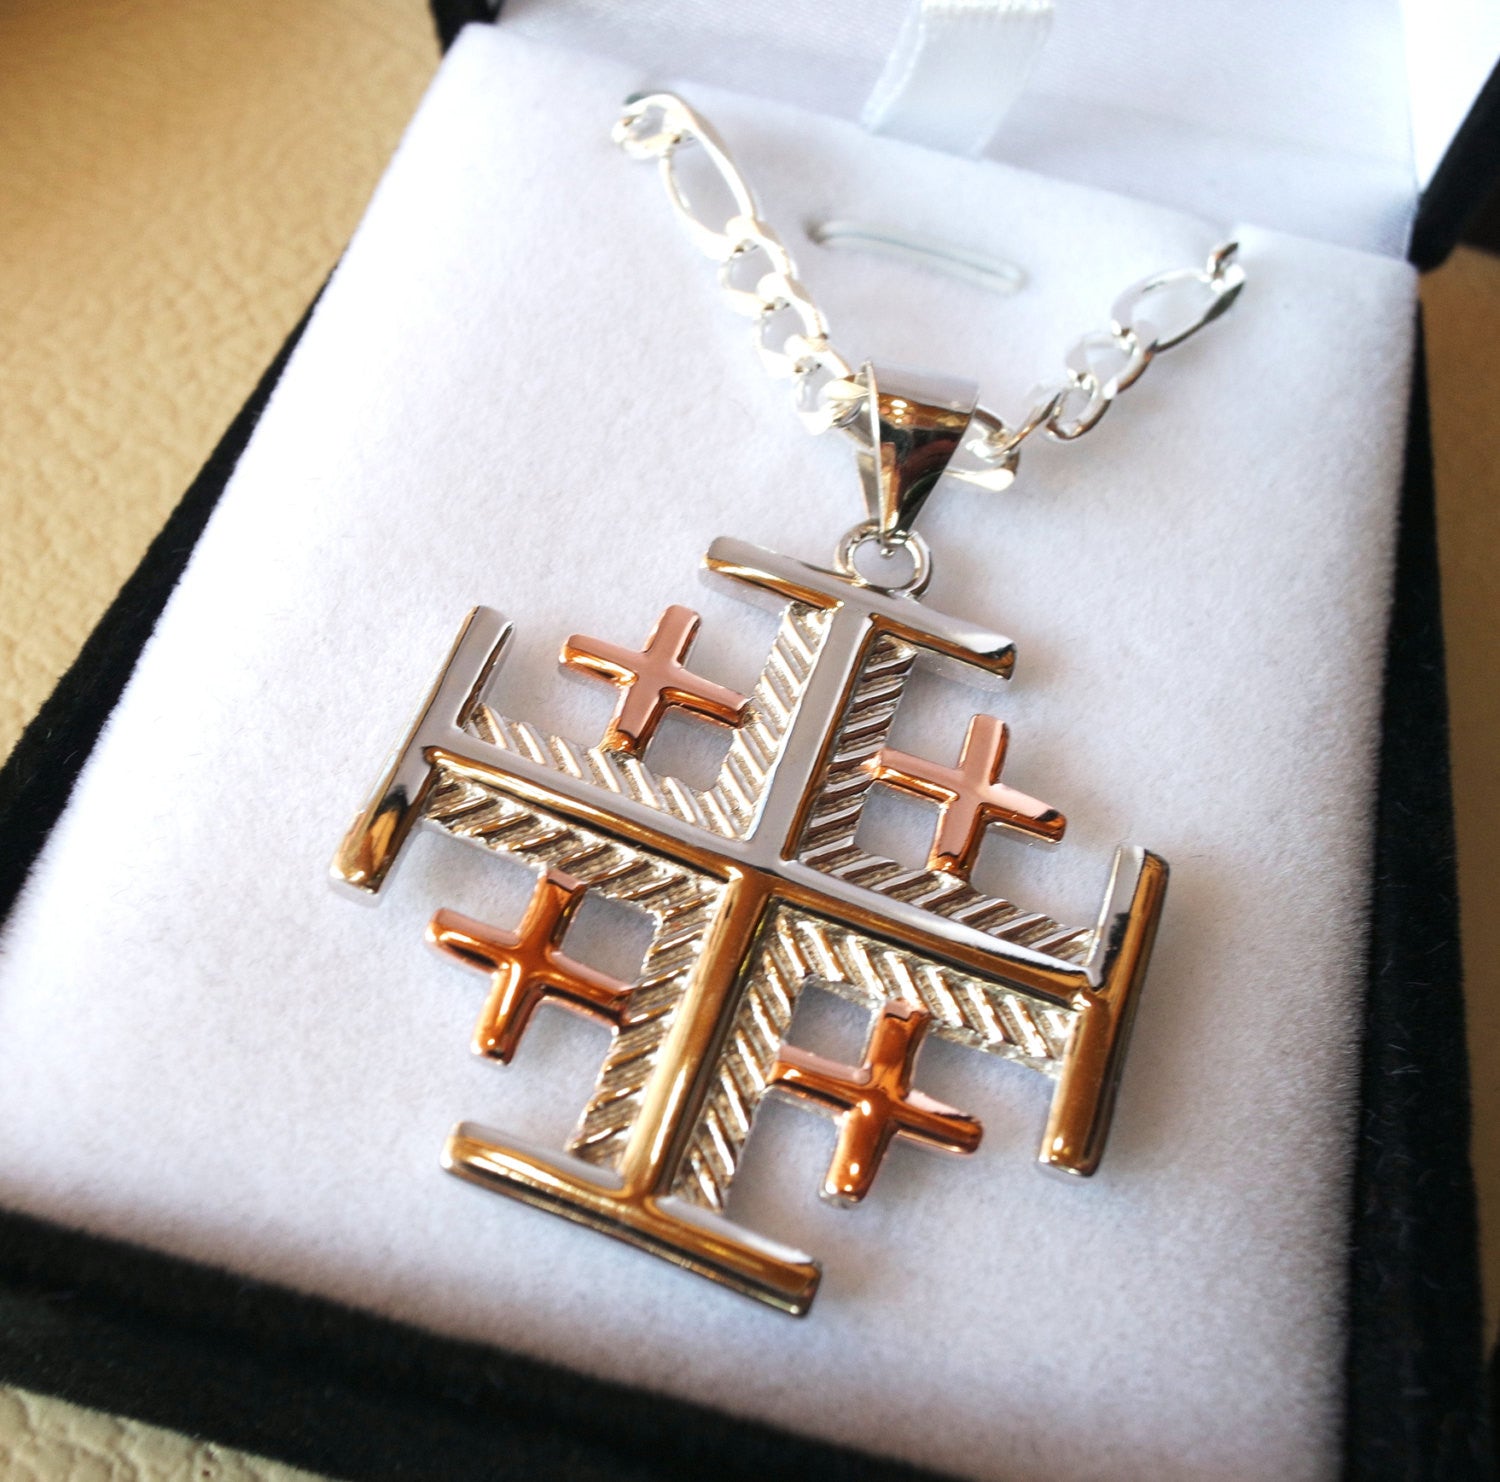 Men's Two-Tone Diamond Cross Pendant Necklace 1/10ctw | REEDS Jewelers